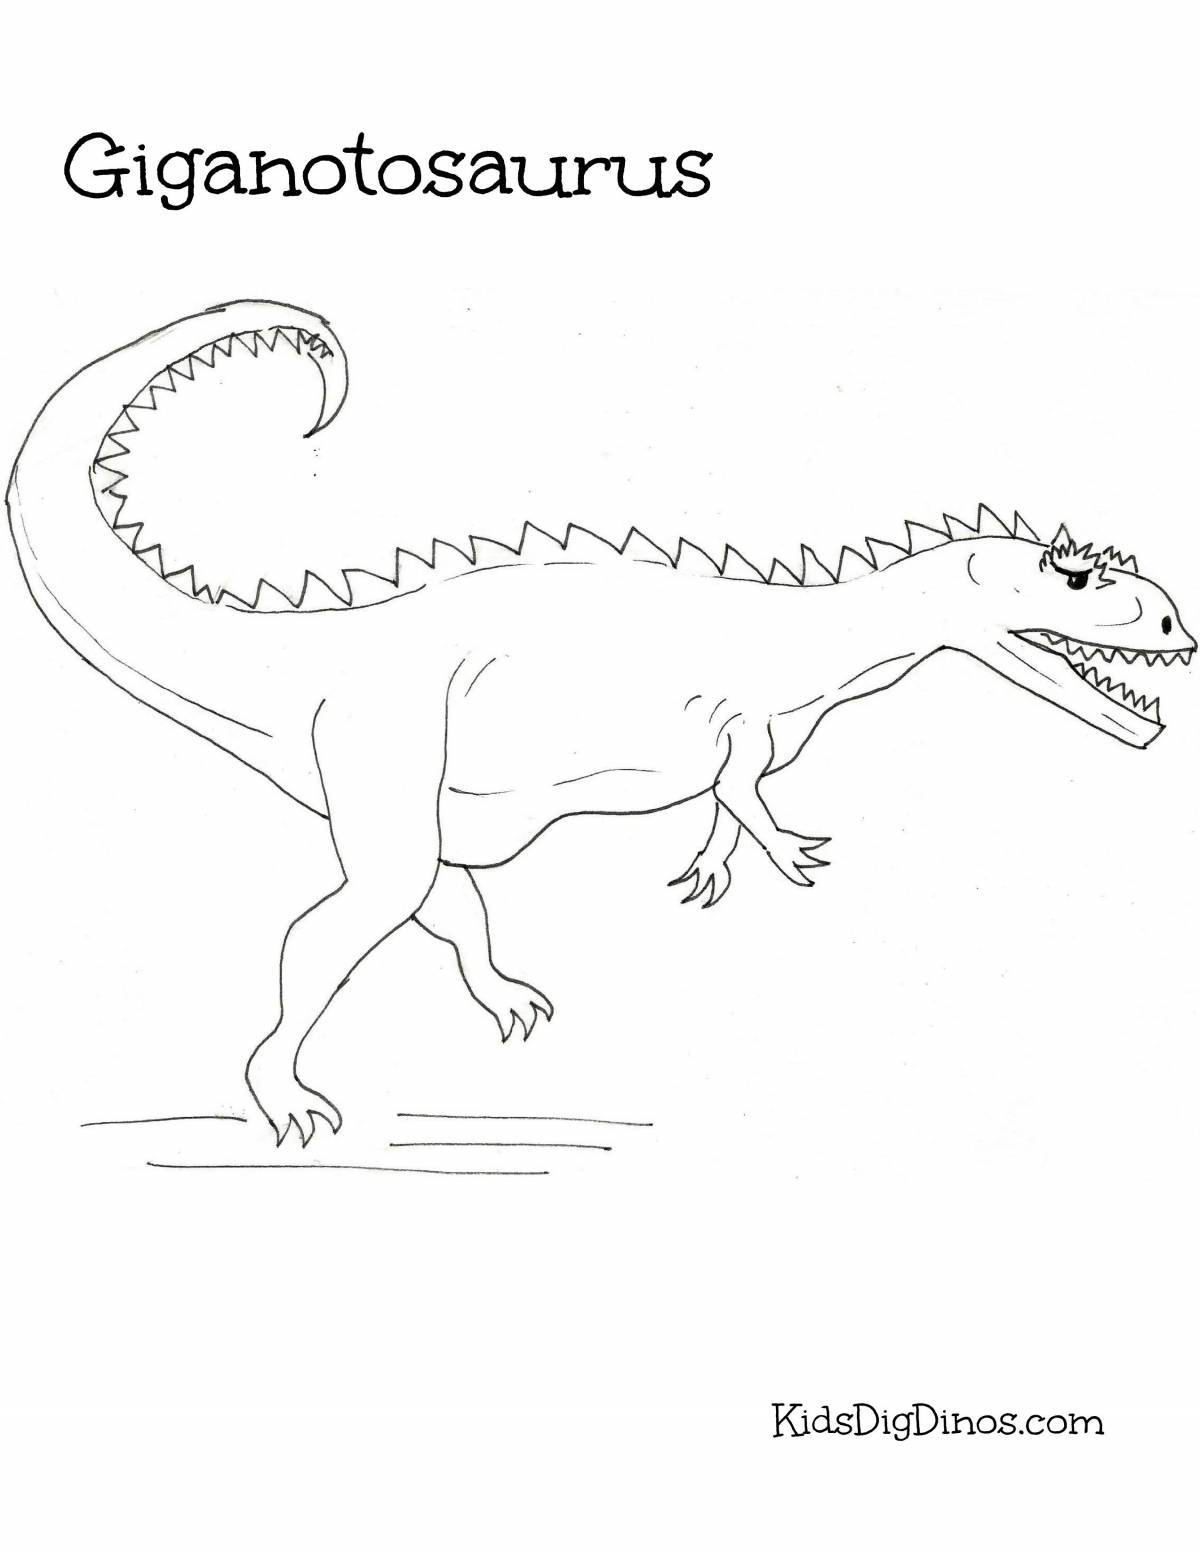 Cute Giganosaurus Coloring Page